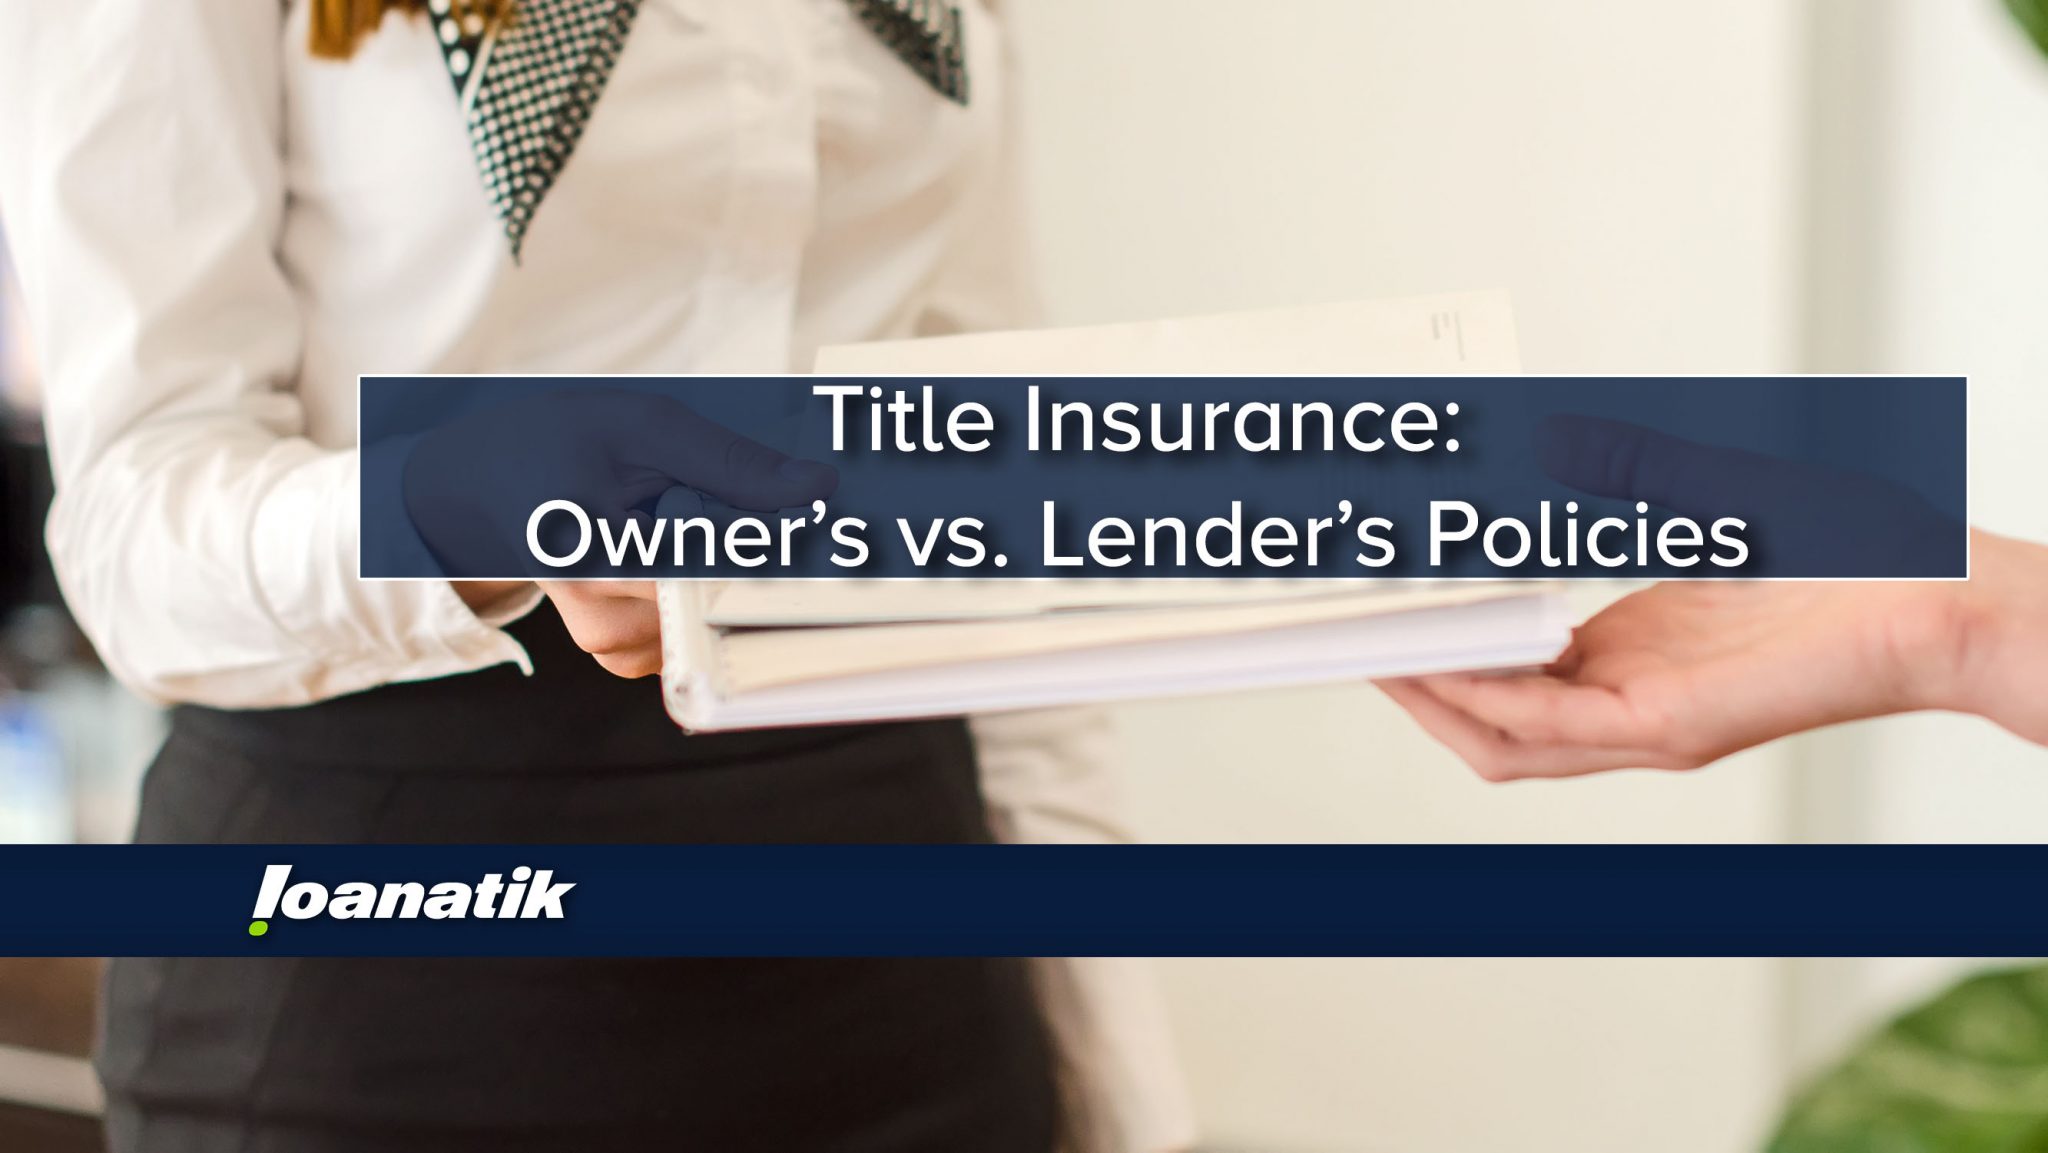 Title Insurance: Owner's vs. Lender's Policies